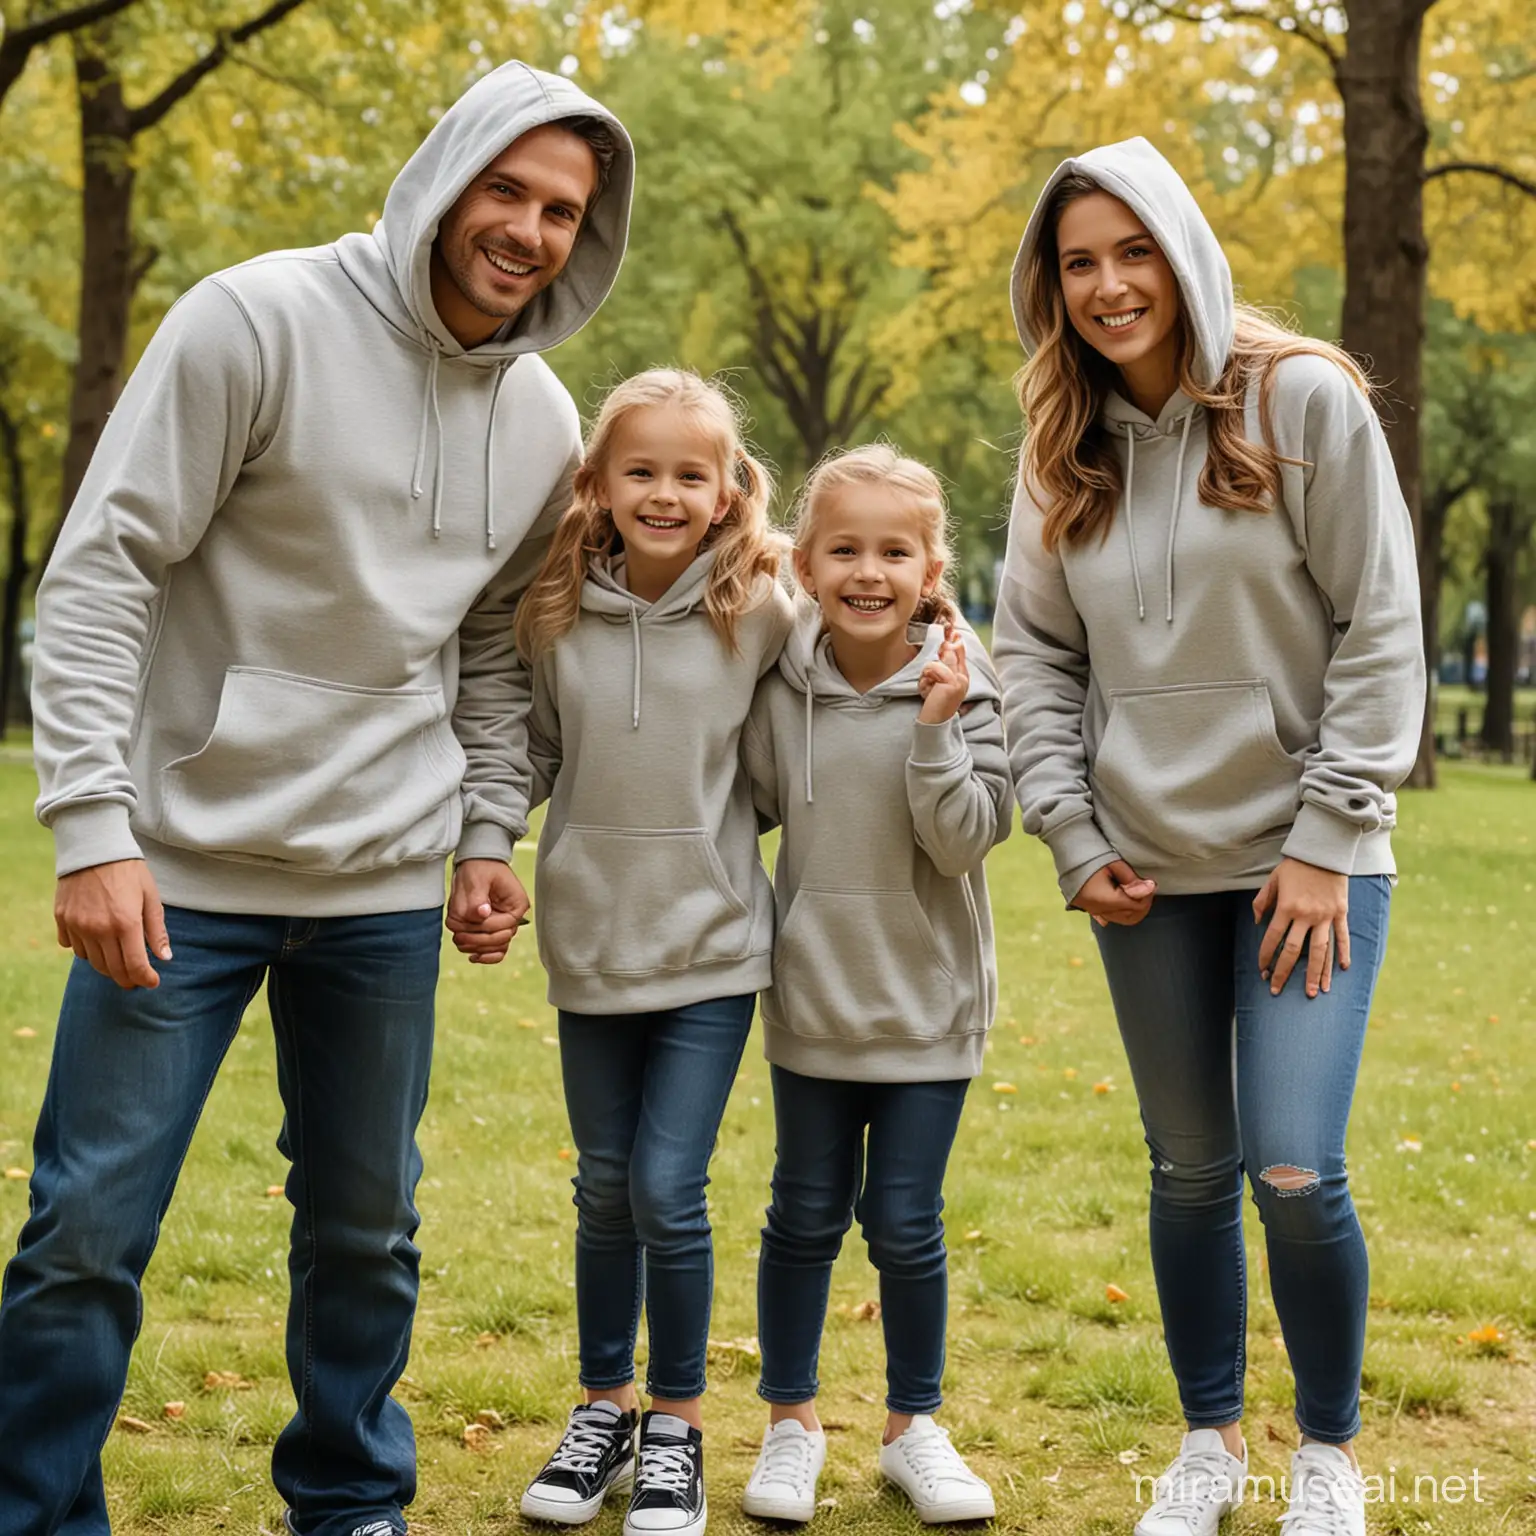 Joyful Family Fun Hooded Sweatshirtclad Kids in the Park